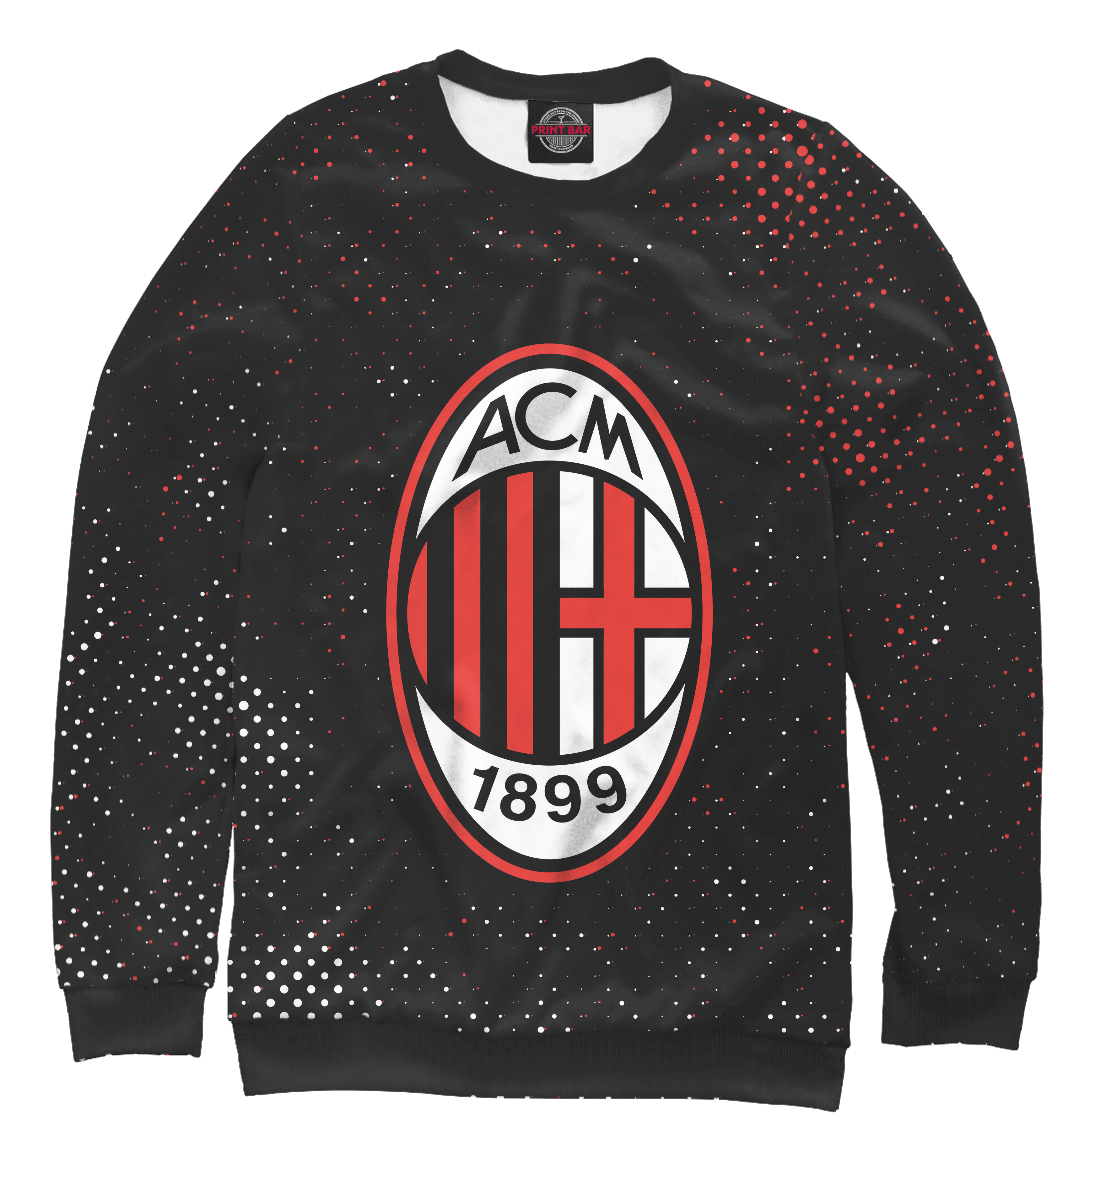 Мужской Свитшот AC Milan / Милан, артикул ACM-978207-swi-2mp